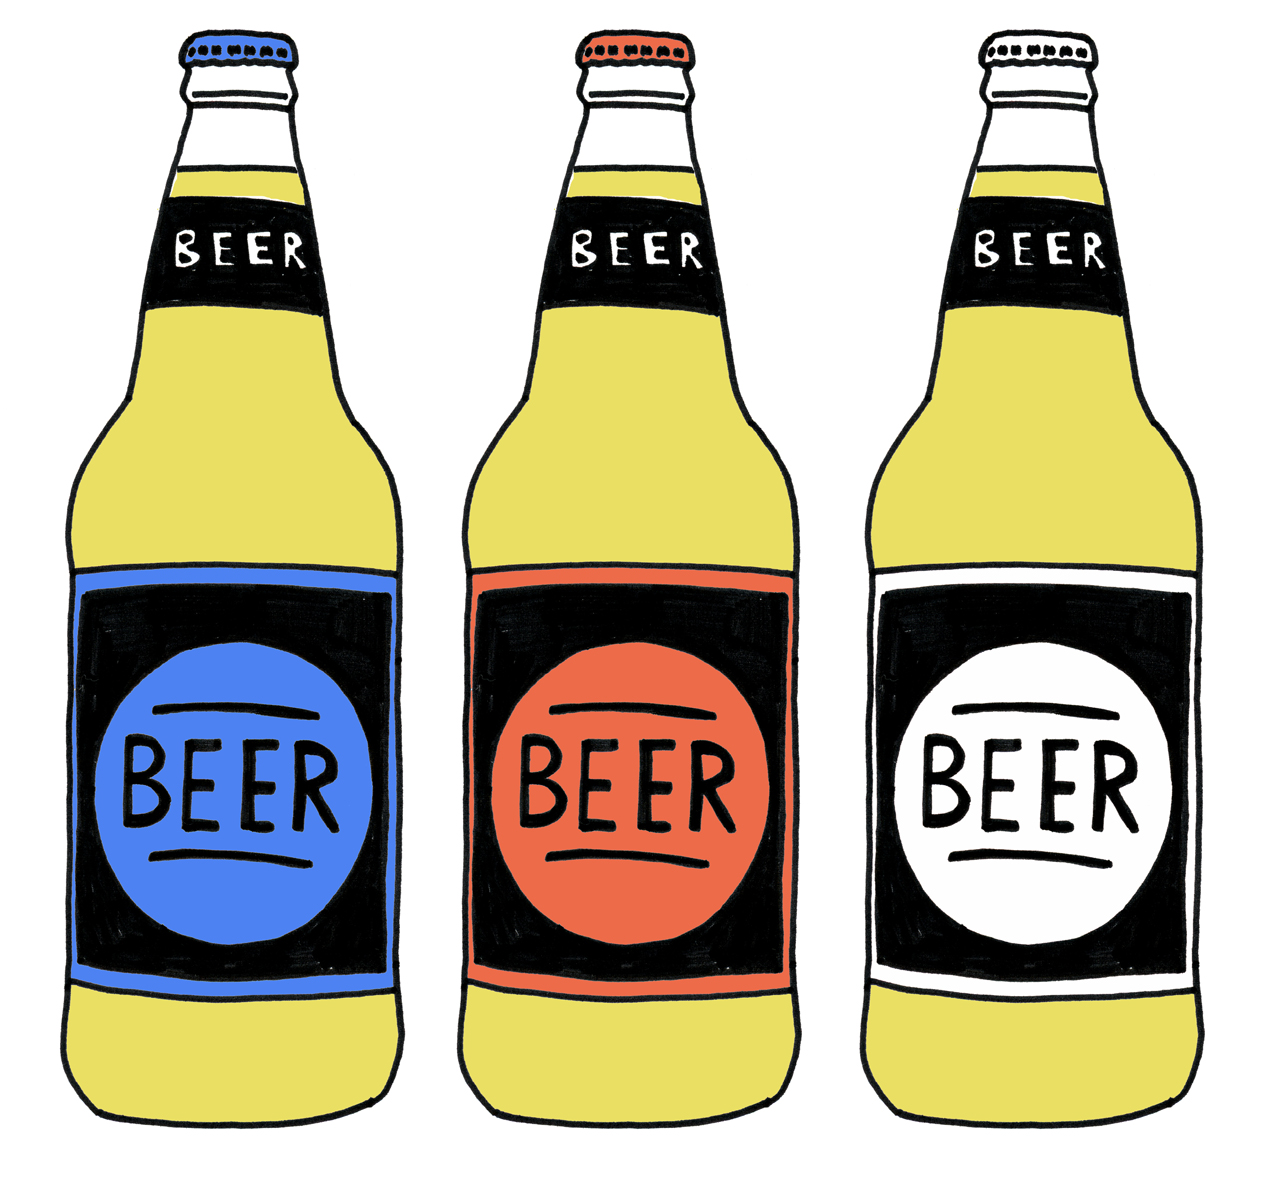 Beer and Cider bottle illustrations | || Analogue Forever ||